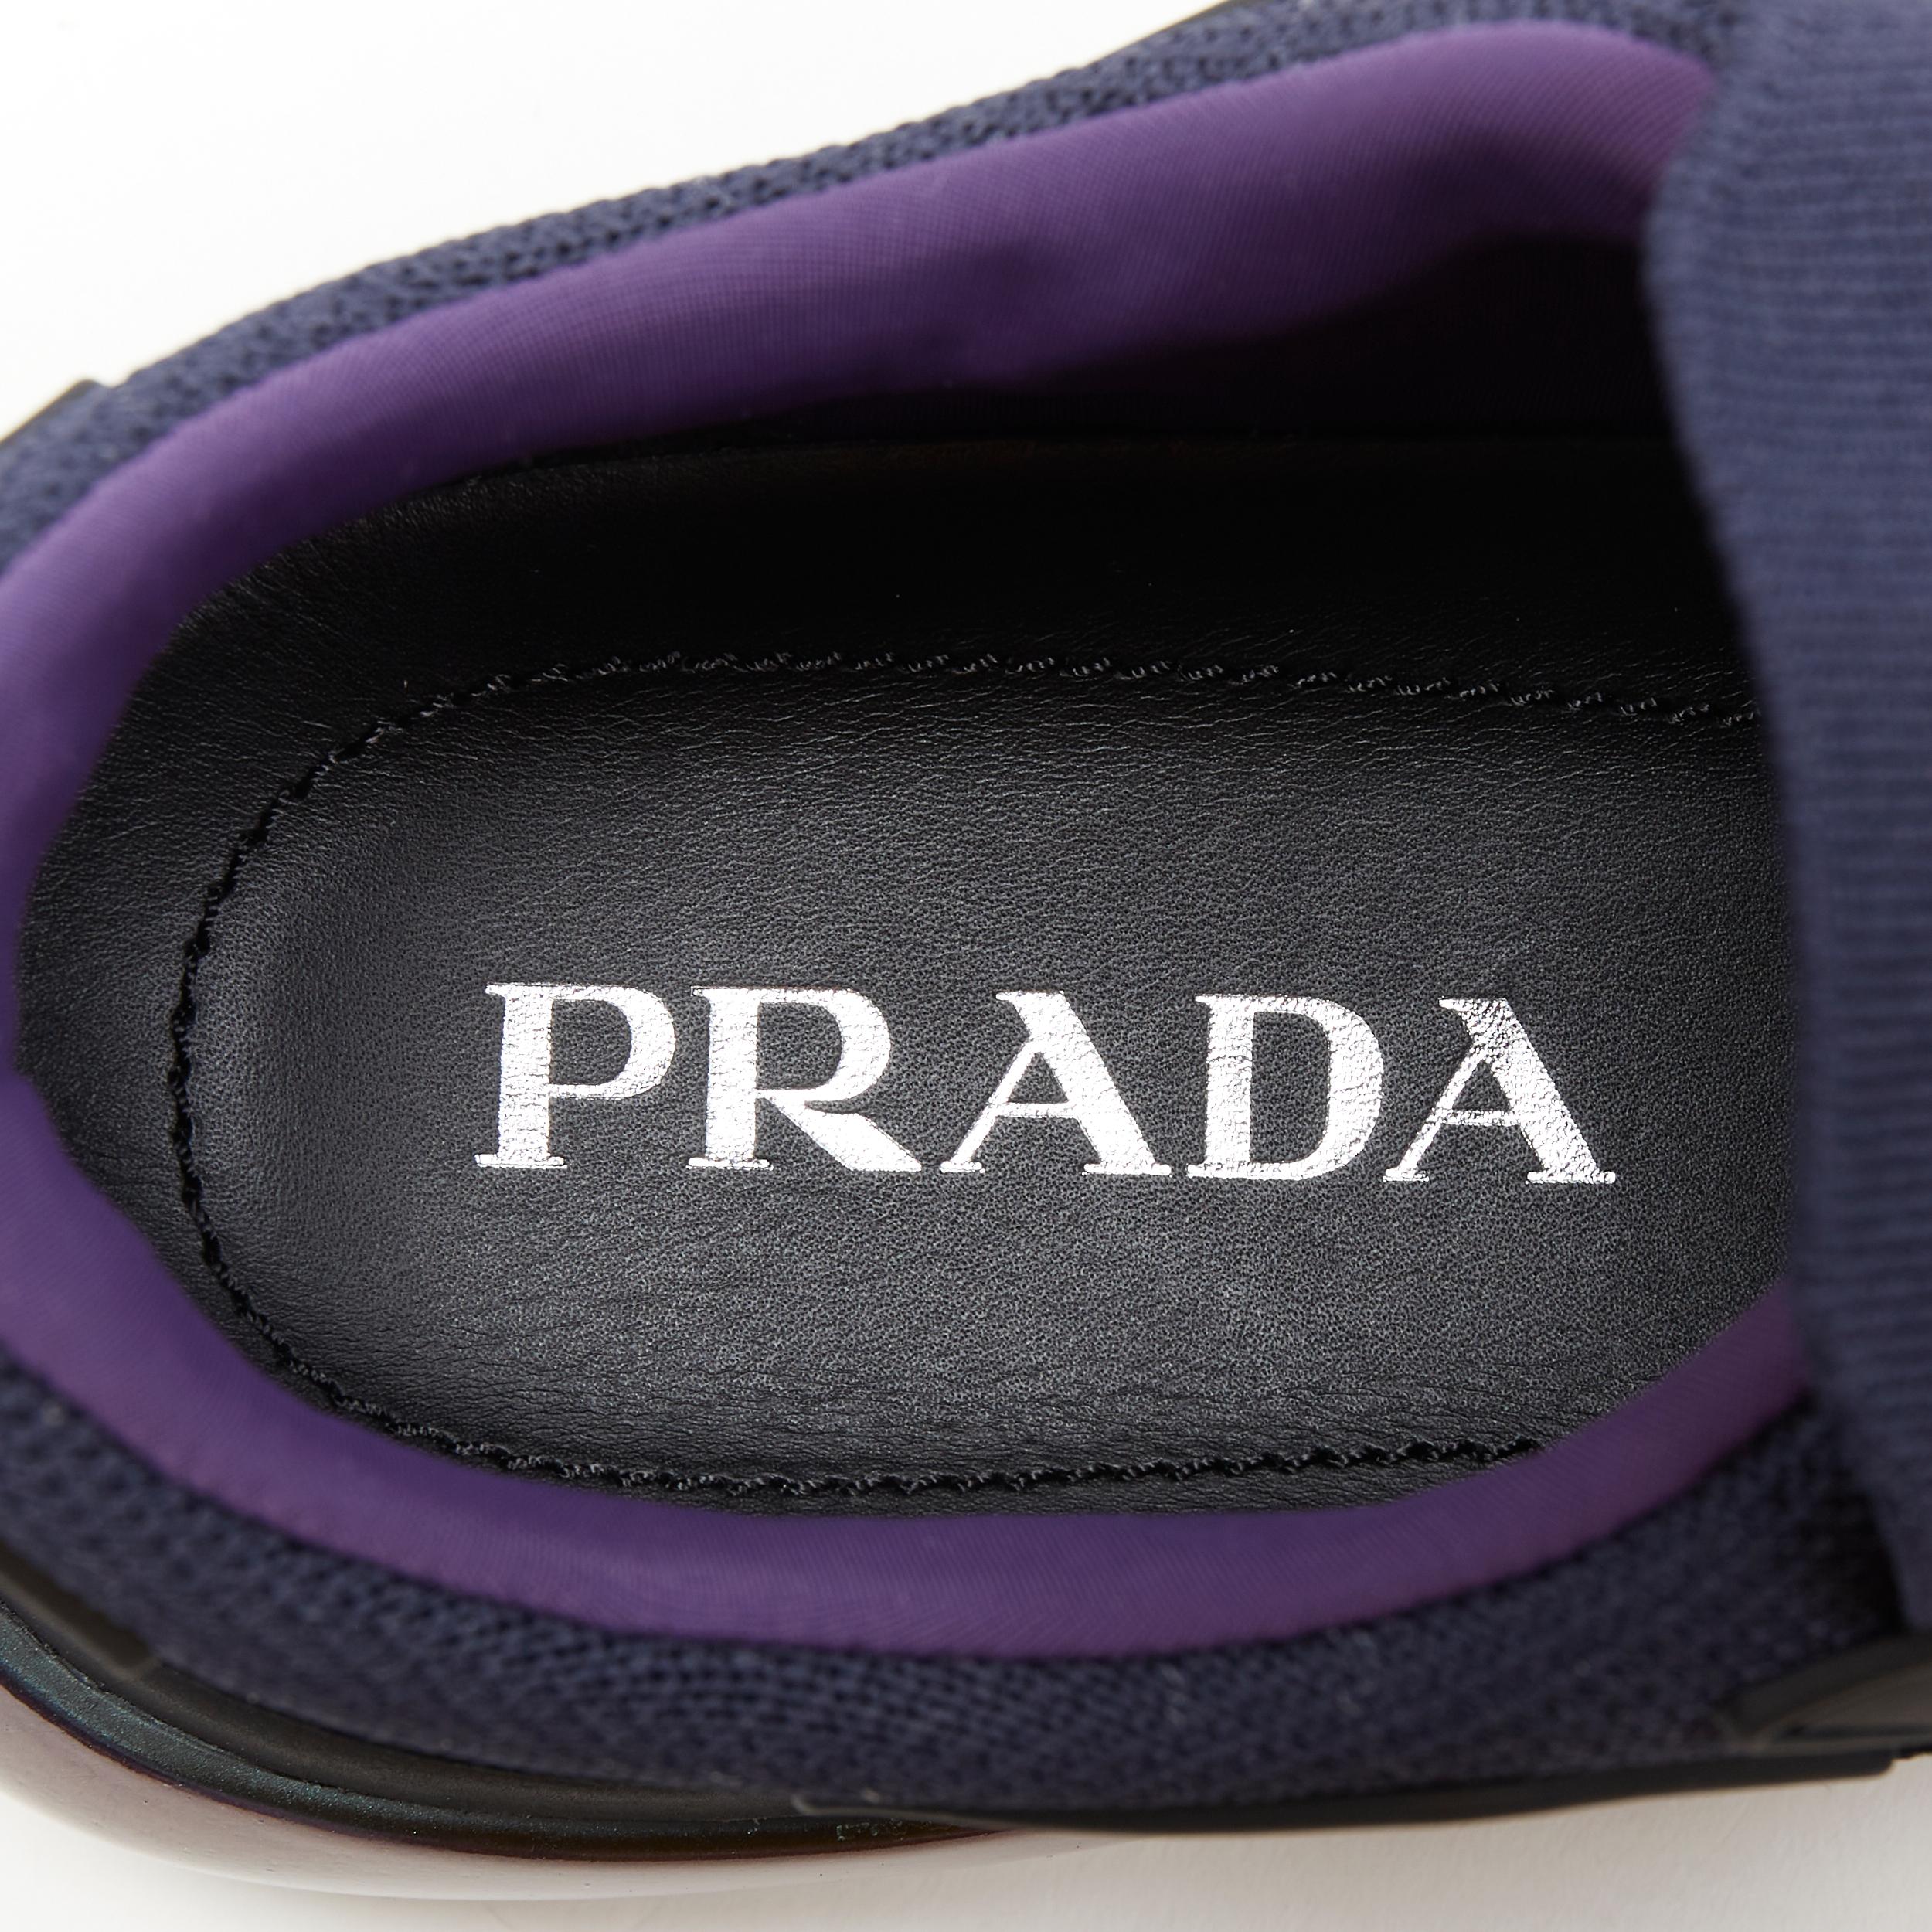 new PRADA 2018 Cloudbust iridescent navy blue rubber low sneaker UK8.5 EU41.5 4